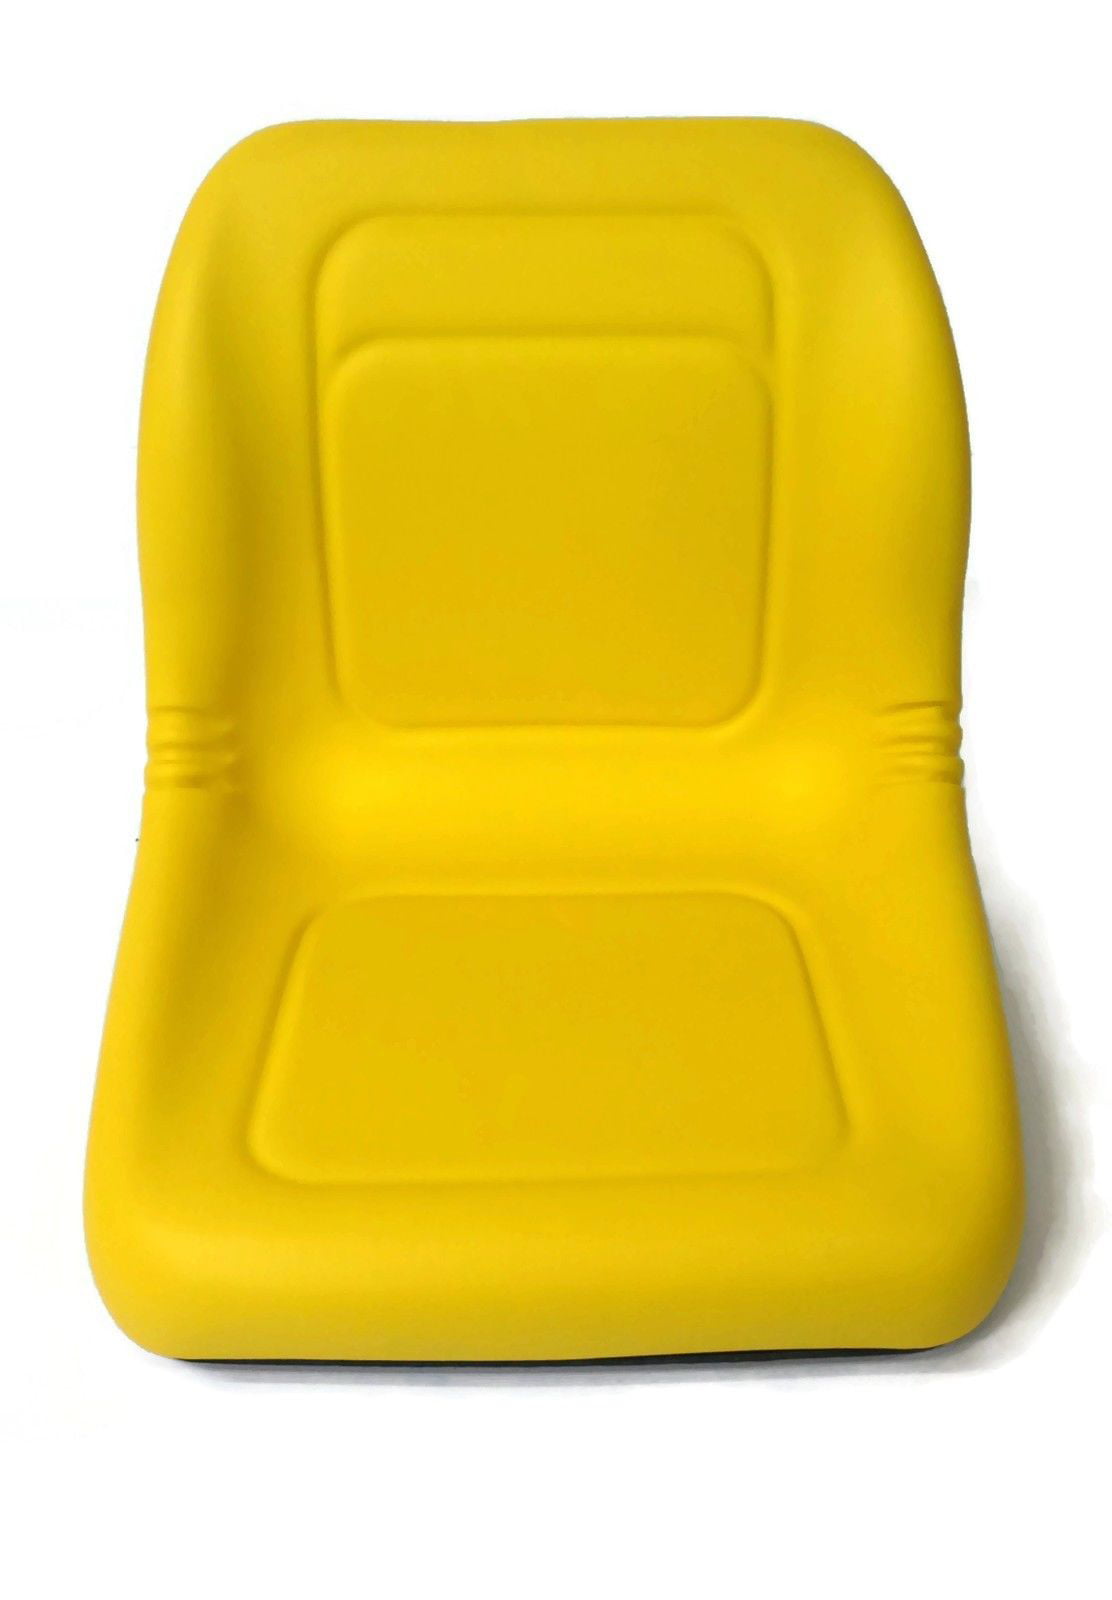 New Yellow HIGH BACK SEAT w/ Pivot Rod Bracket for John Deere AM117924 AM116408 